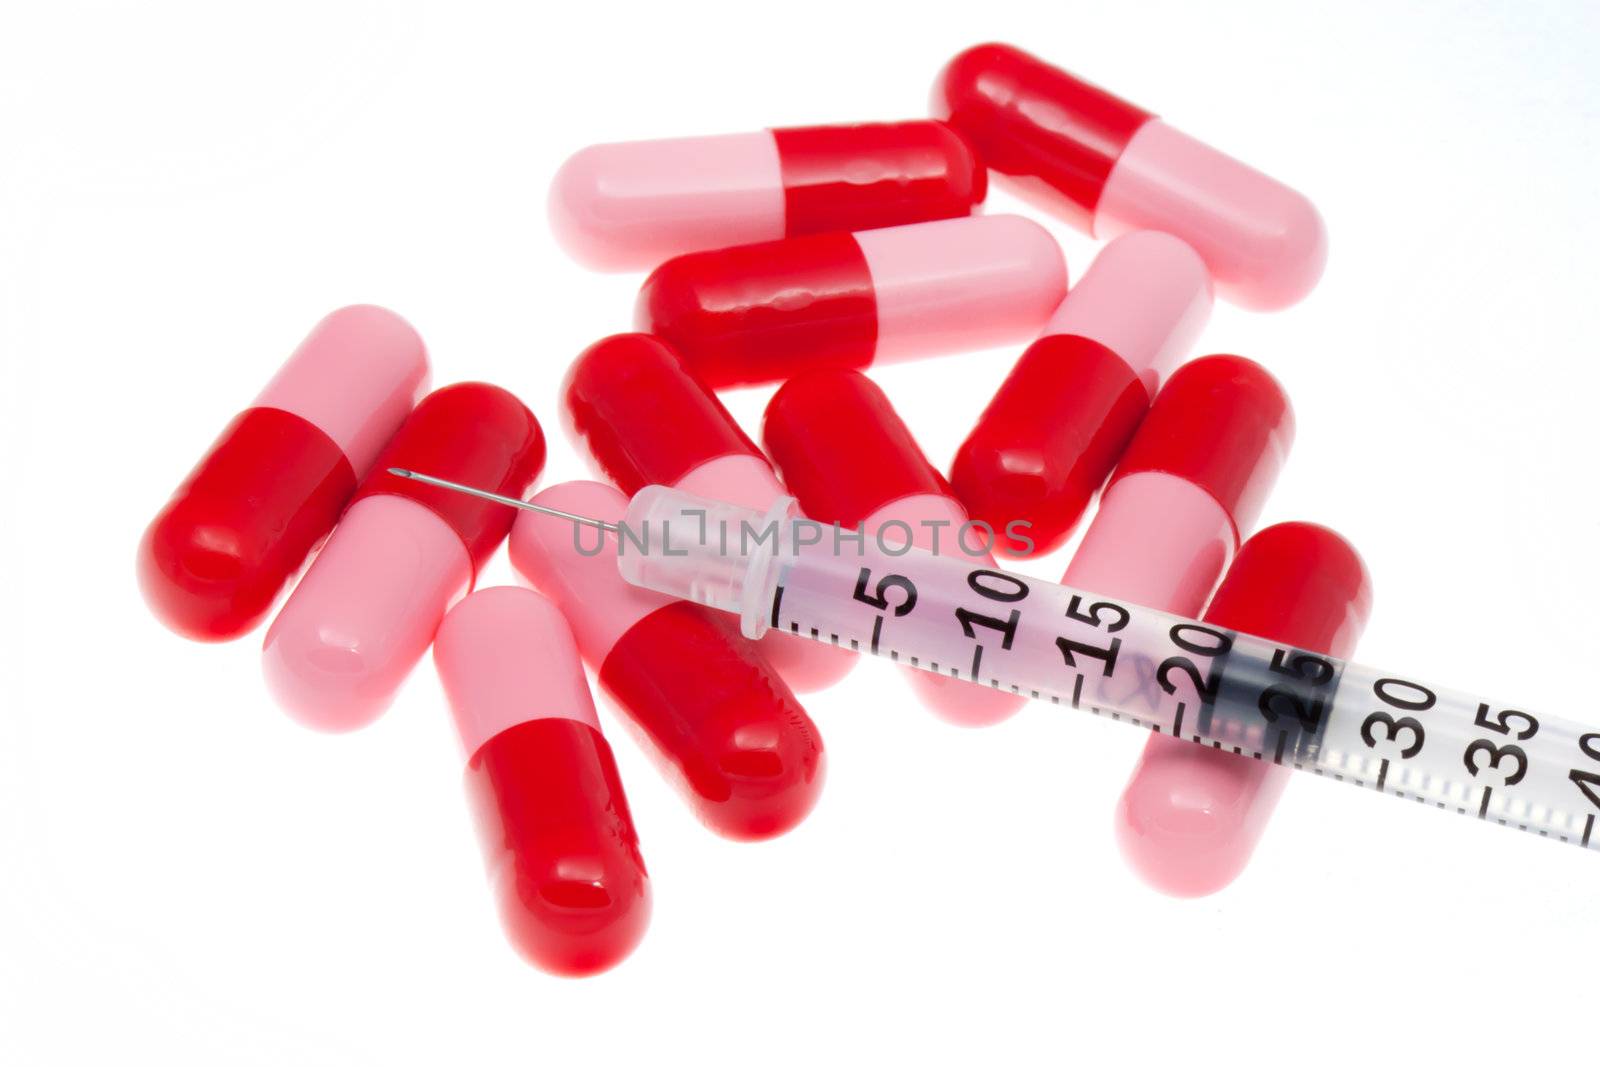 Syringe with Red Pills by melpomene